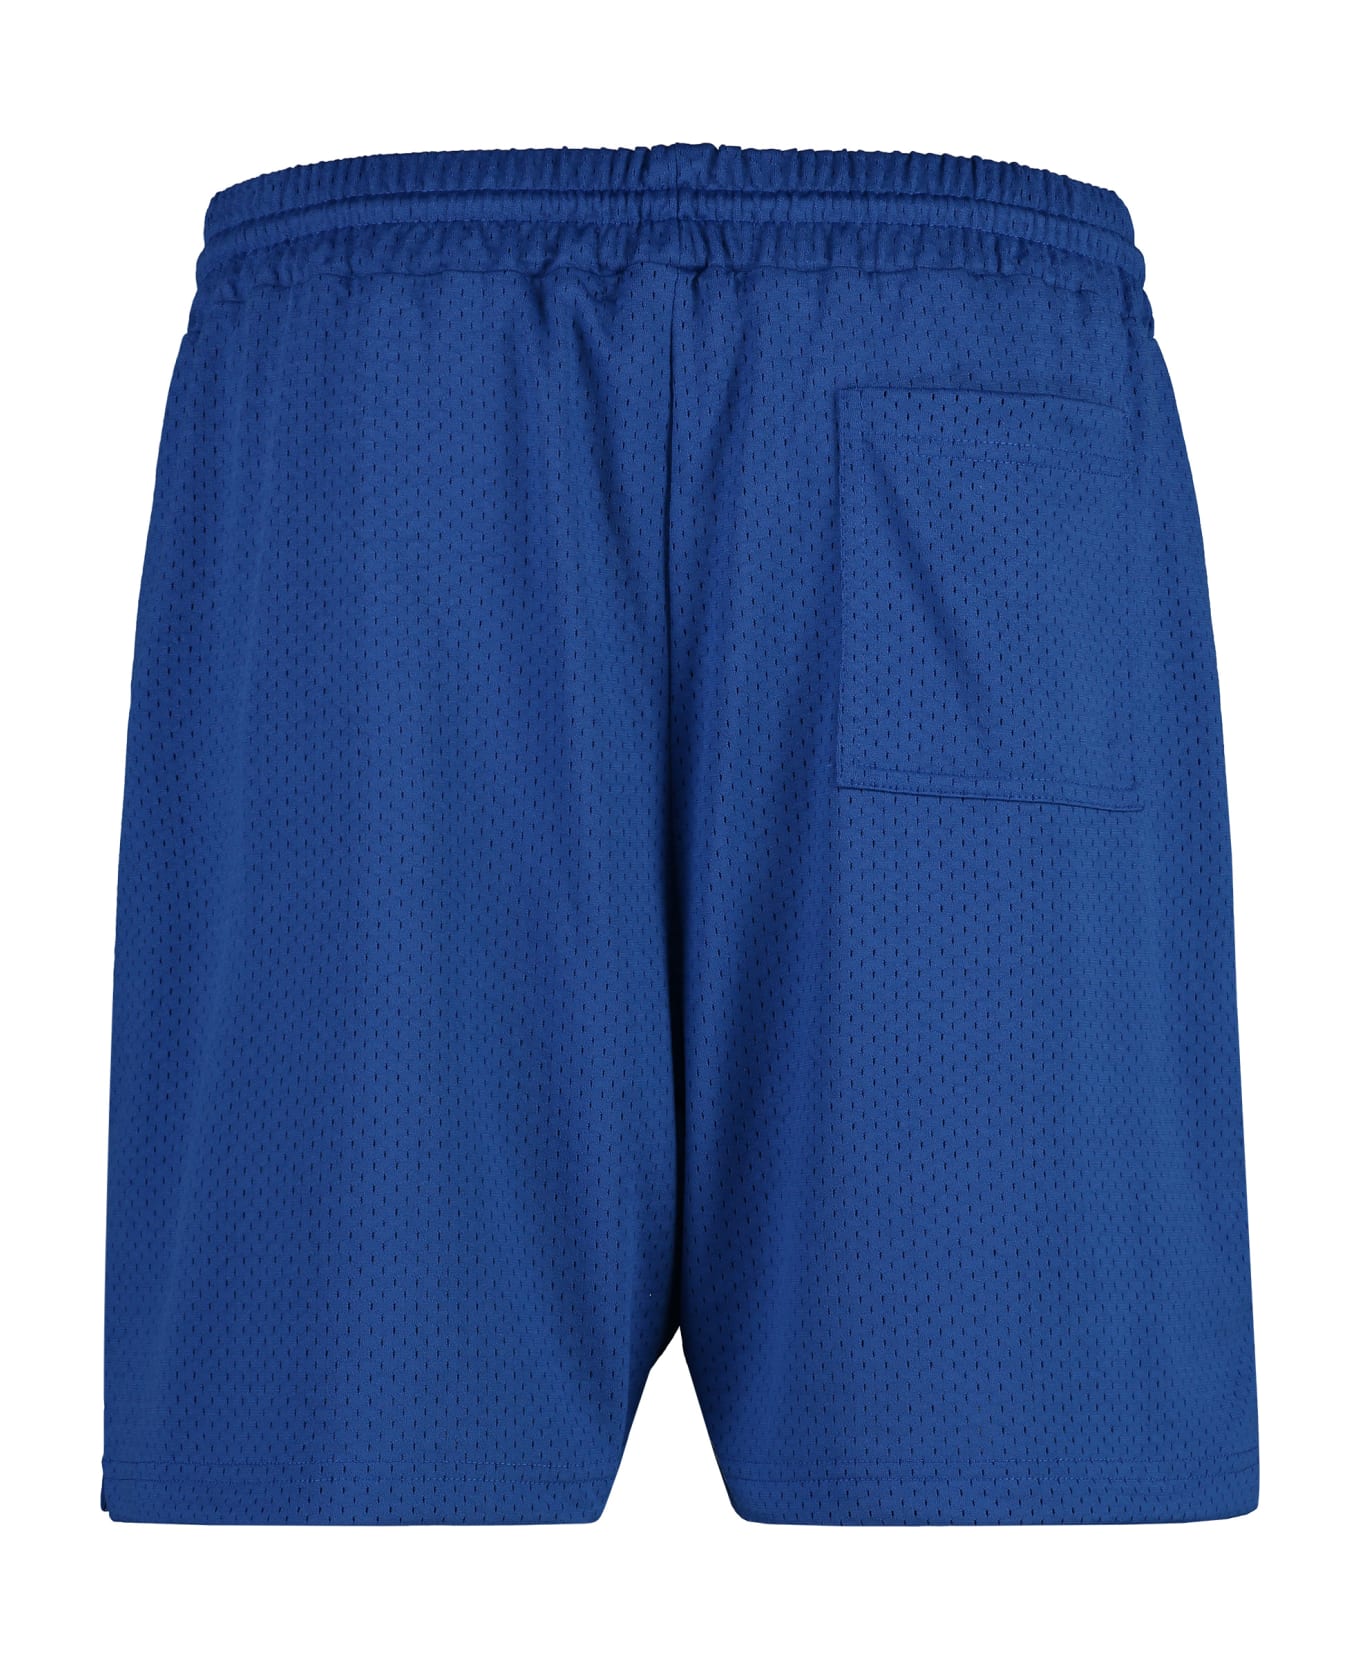 REPRESENT Nylon Bermuda Shorts - blue